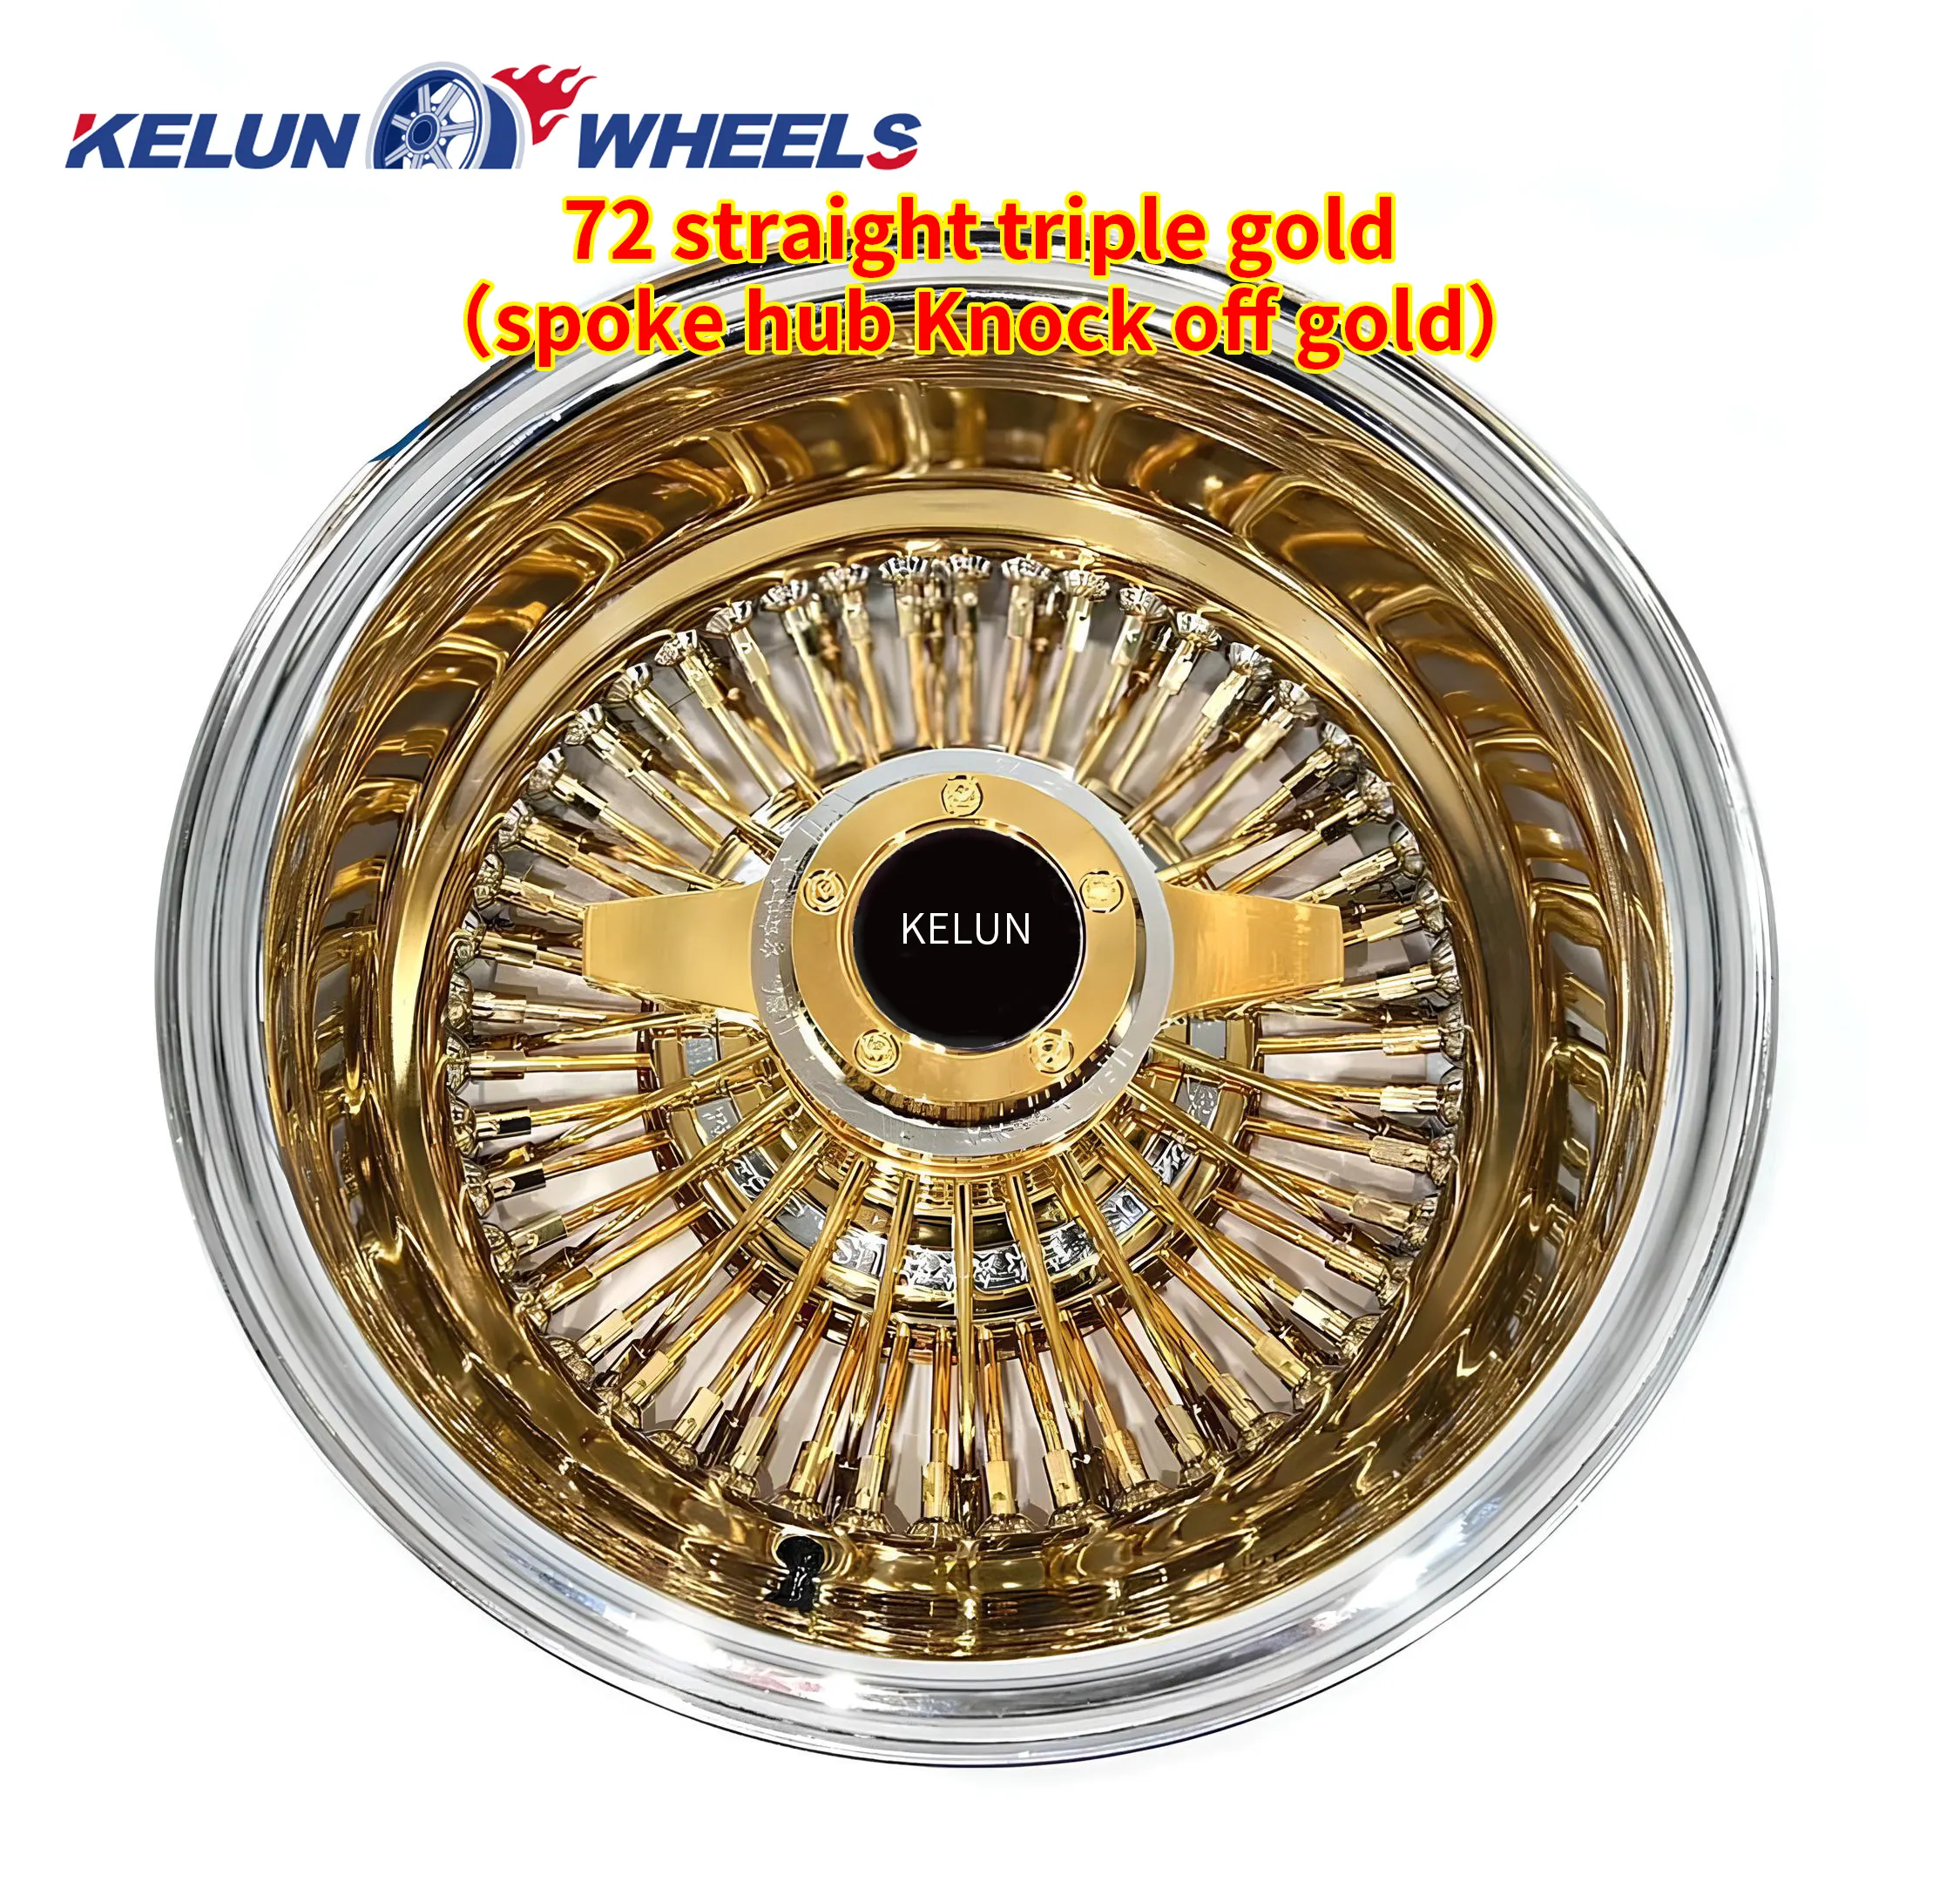 dayton wire wheels 13 14 inch triple gold Wire Wheel 72 cross/straight 100 straight gold wire wheels